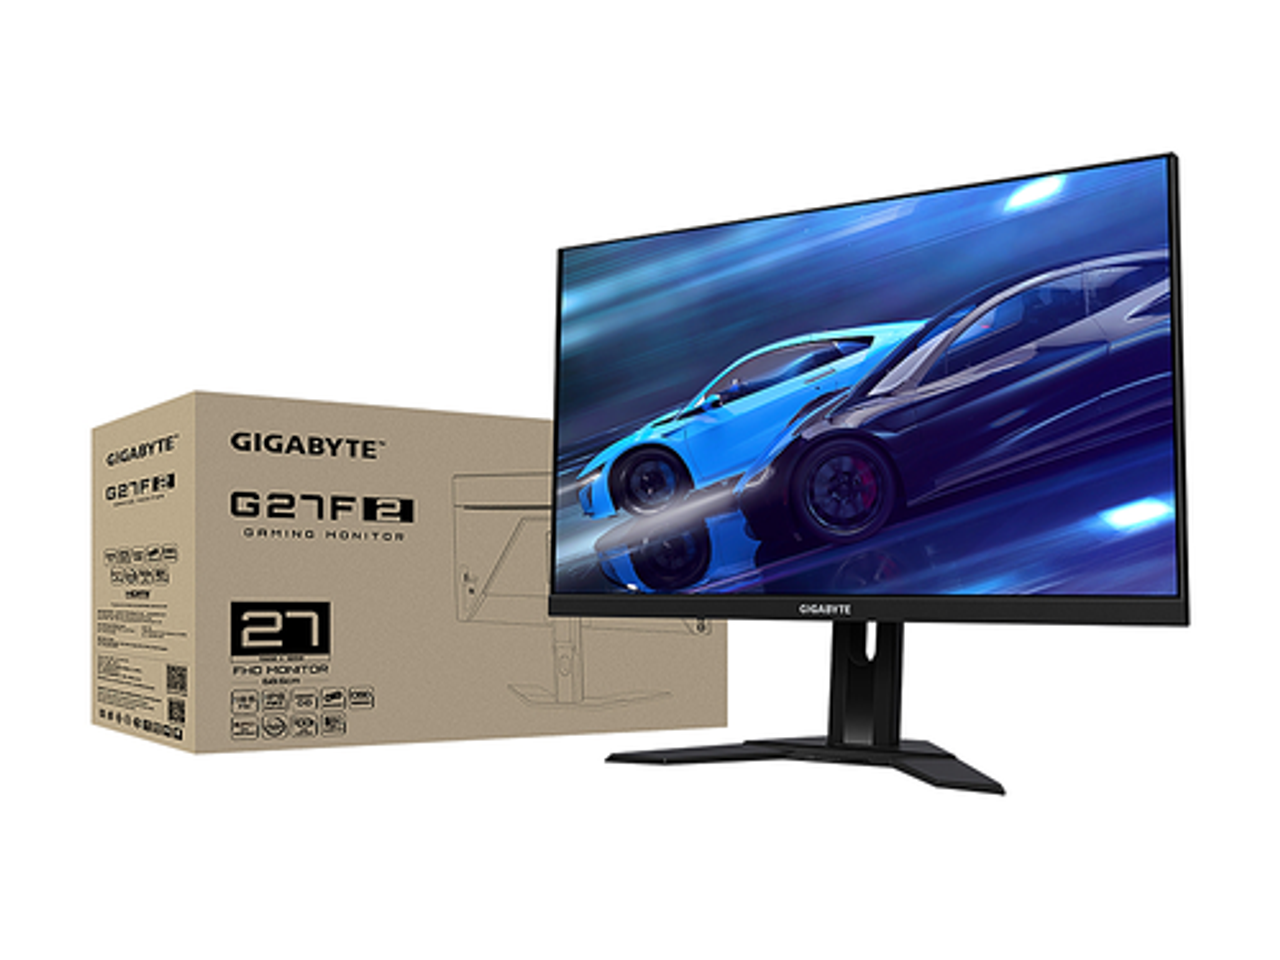 GIGABYTE - G27F 2 27" IPS FHD FreeSync Premium IPS Gaming Monitor with HDR (HDMI, DisplayPort, USB) - Black